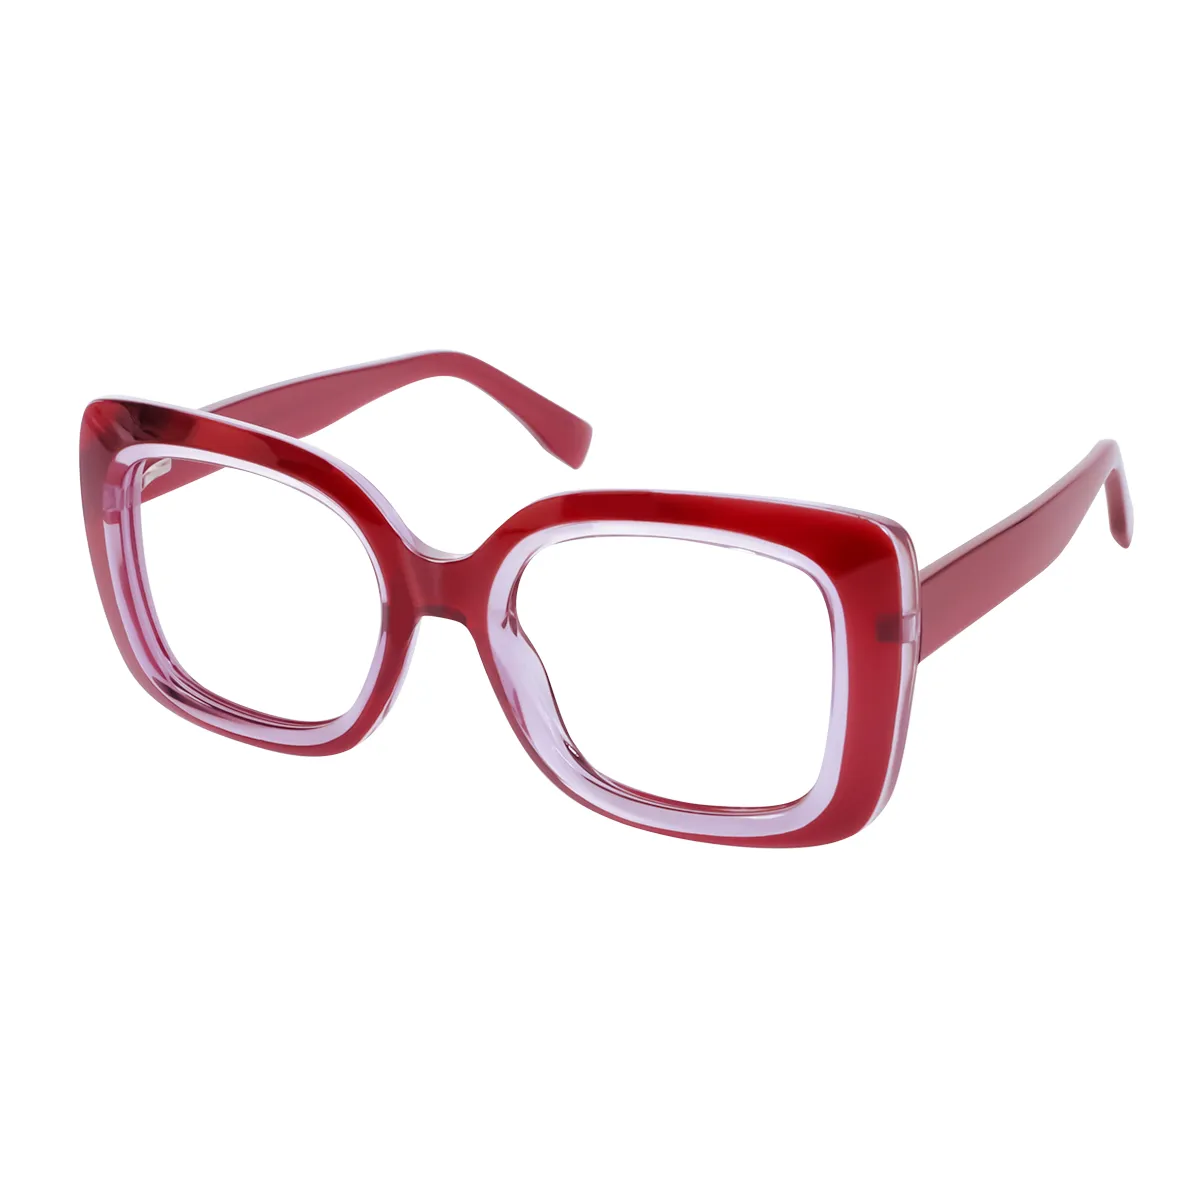 Madeline - Square Brown Glasses for Women